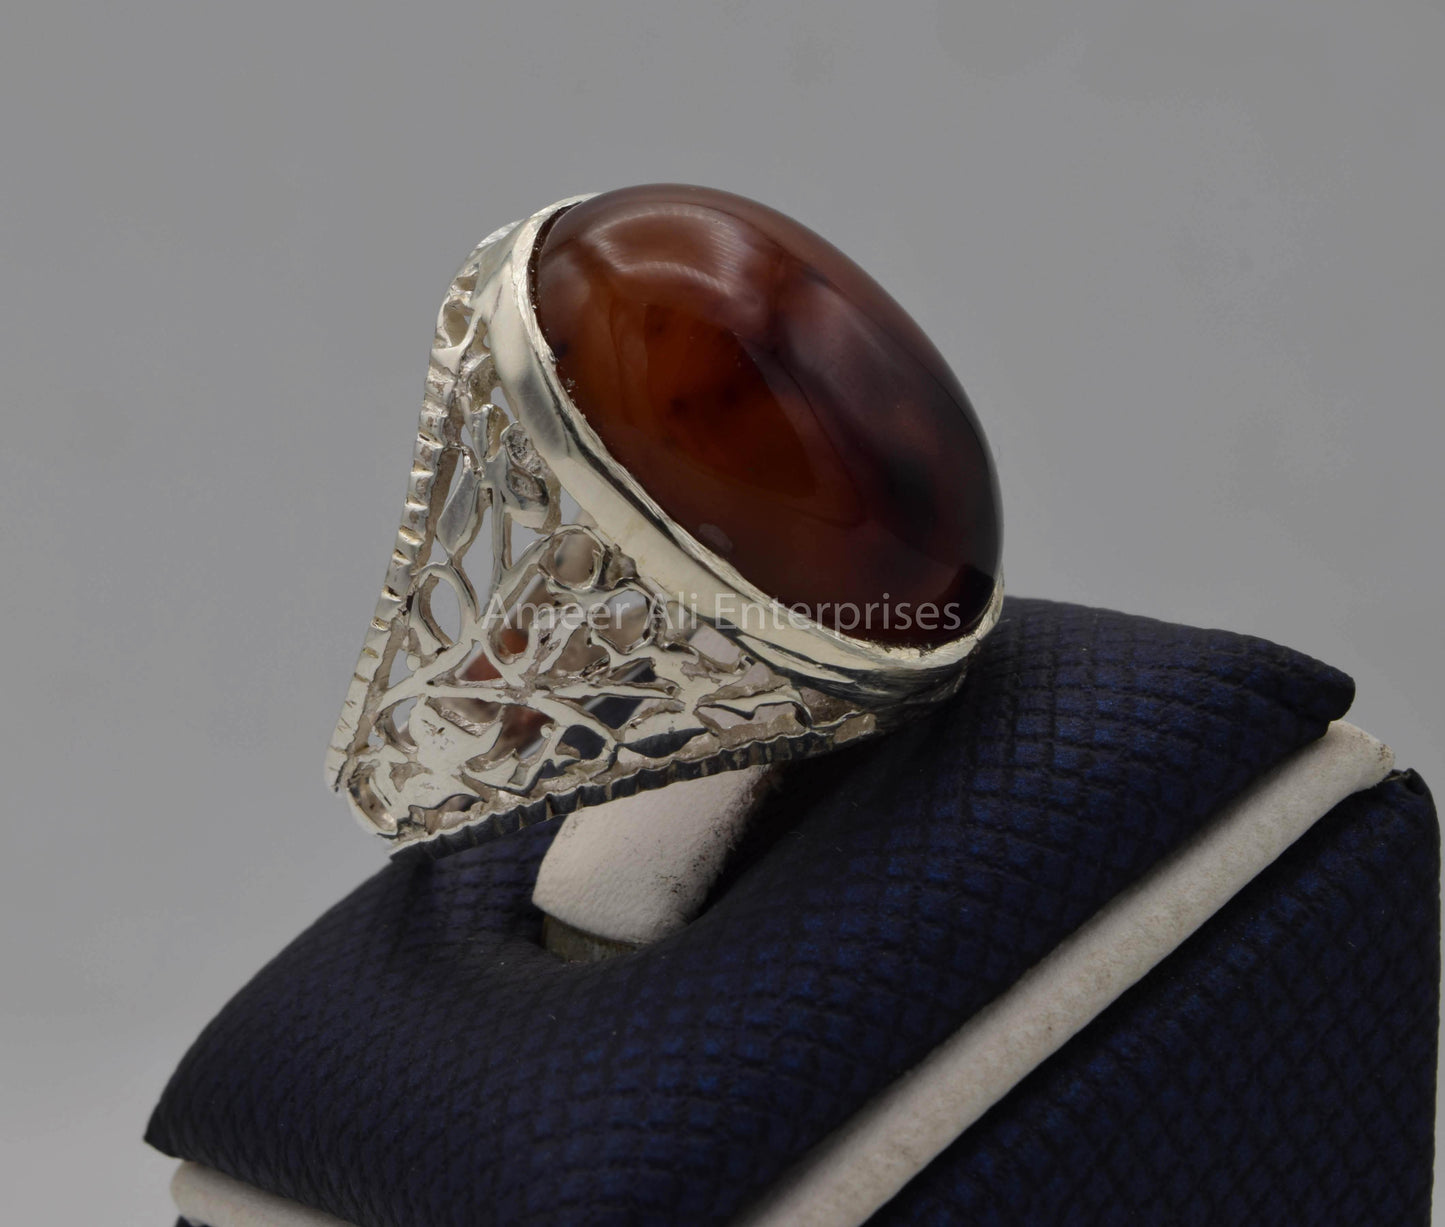 AAE 5659 Chandi Ring 925, Stone: Sulemani Aqeeq - AmeerAliEnterprises